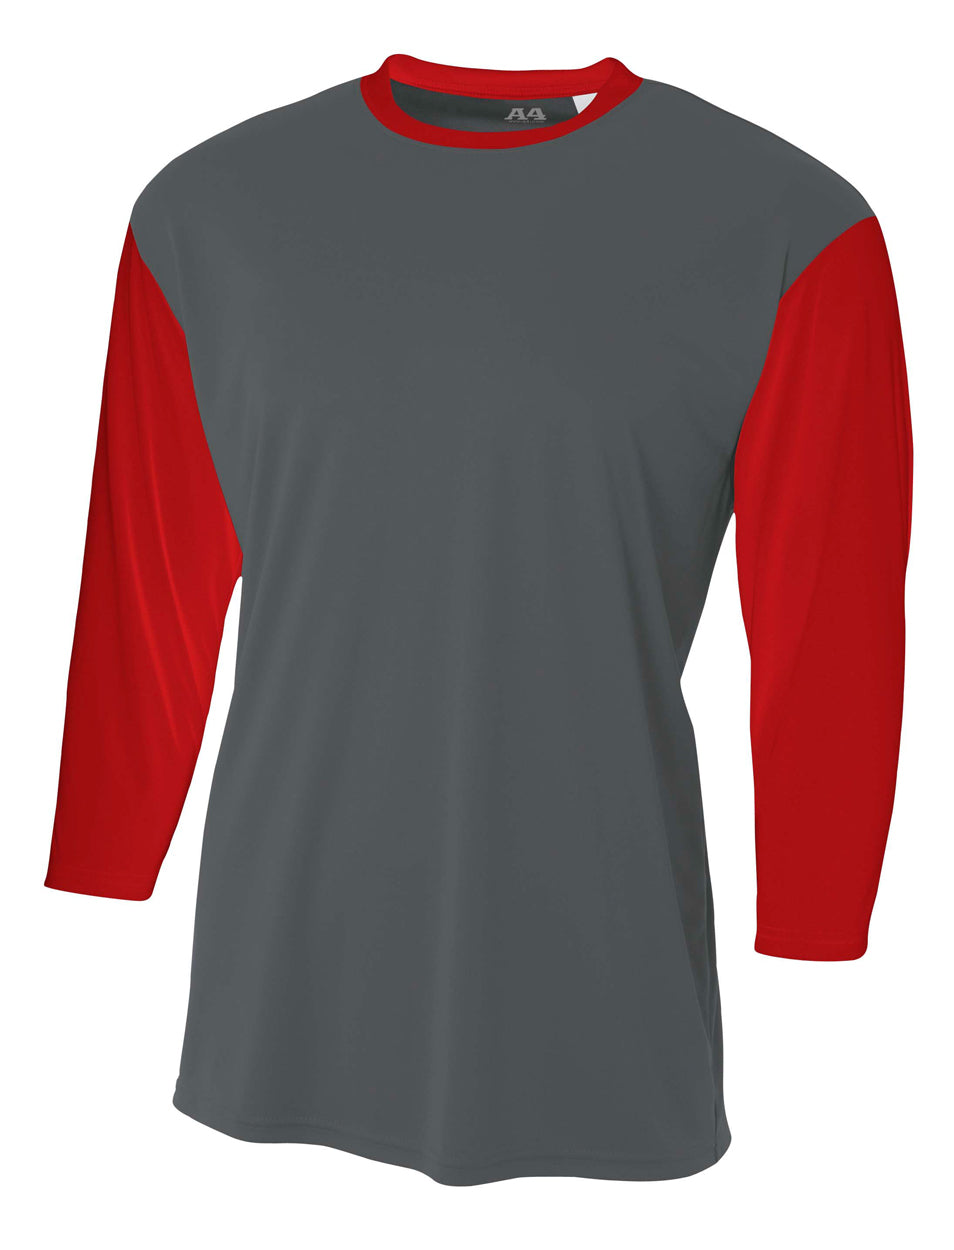 Graphite Scarlet A4 3/4 Sleeve Utility Shirt